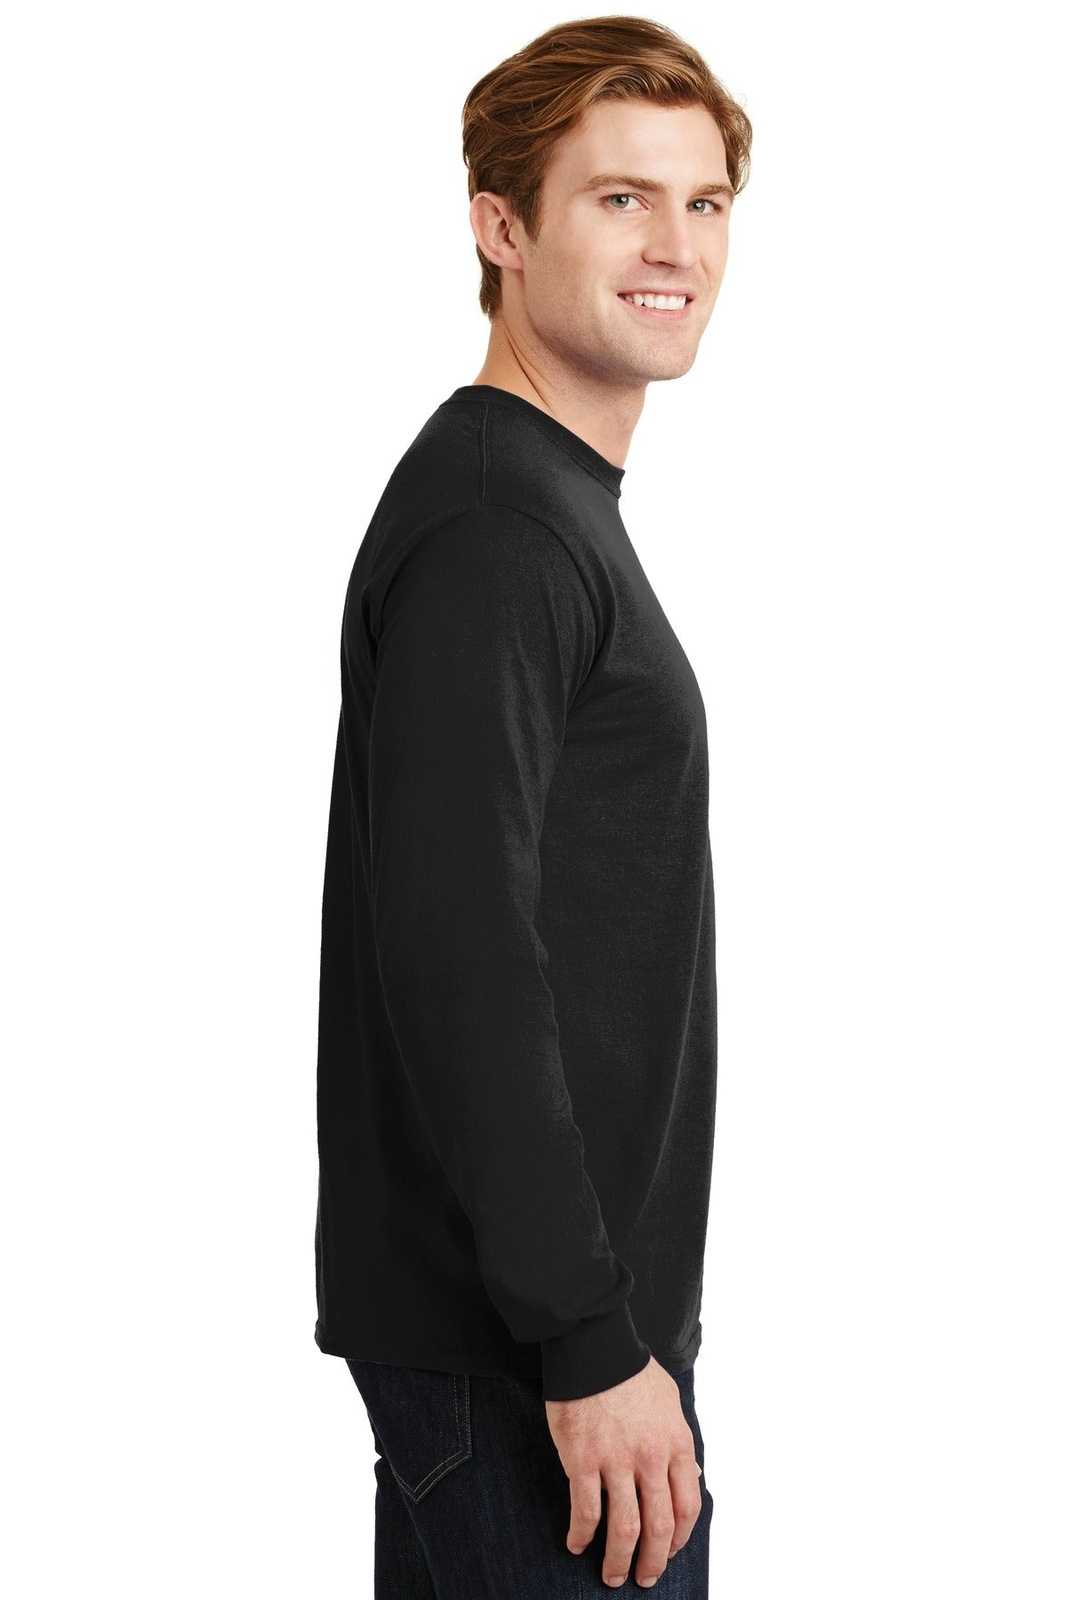 Gildan 8400 Dryblend 50 Cotton/50 Poly Long Sleeve T-Shirt - Black - HIT a Double